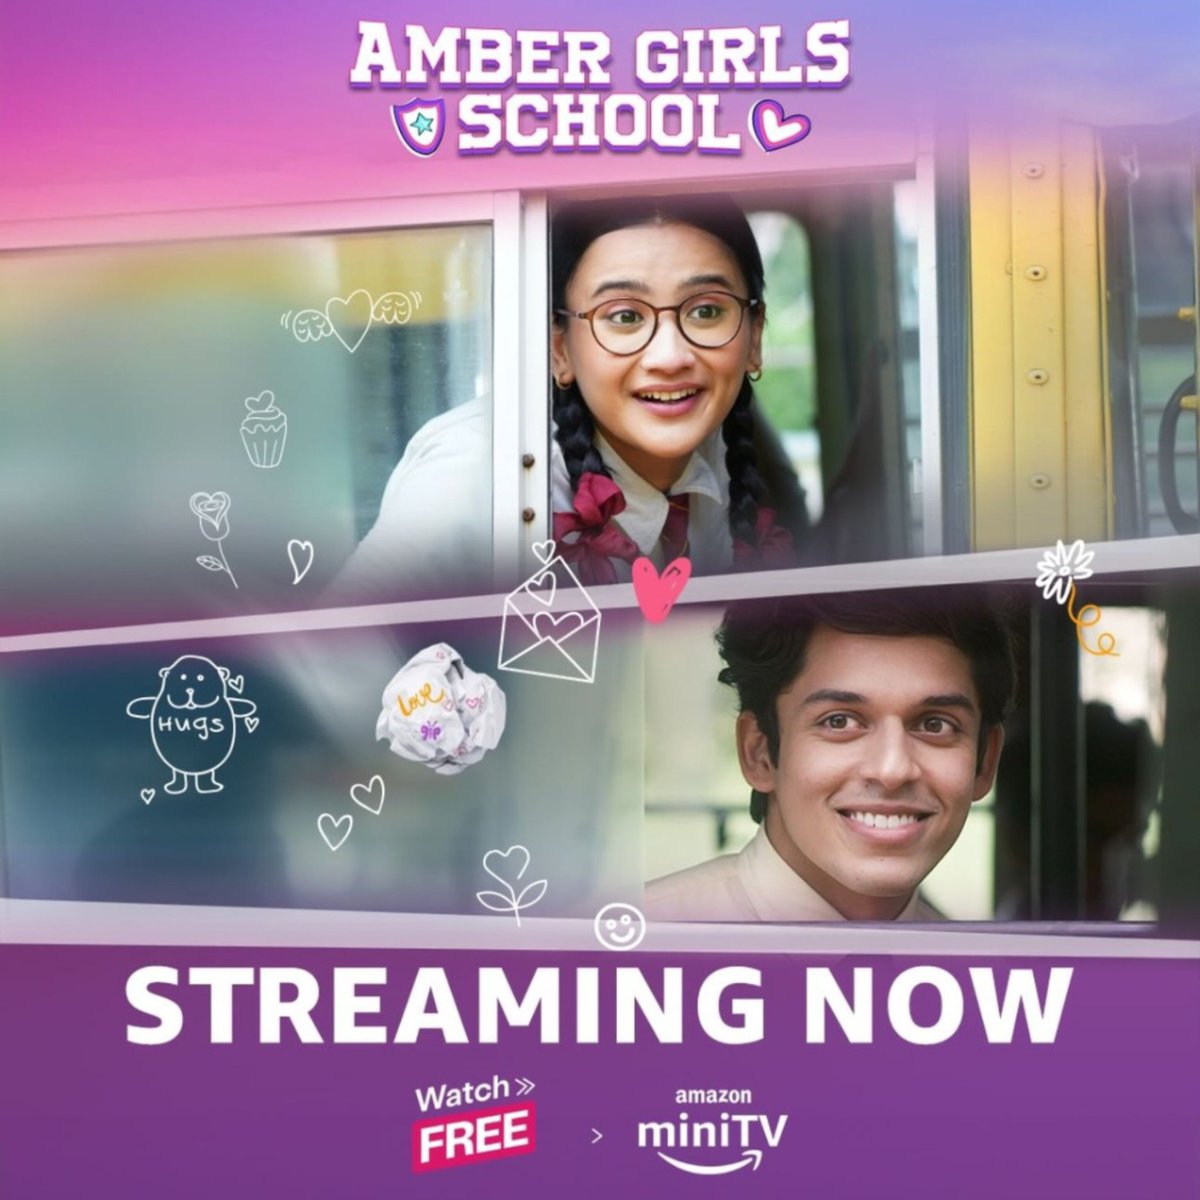 New Series #AmberGirlsSchool Streaming Now On #AmazonMiniTV Free.
Starring: #CelestiBairagey, #KajolChugh, #ShrutiPanwar, #HarshKhurana, #IshikaGagneja, #AdrijaSinha, #SamairaJain, #KeshavMehta & More.
Directed By #RajlaxmiRatanSeth.

#AmberGirlsSchoolOnAmazonminiTV #PrimeVerse